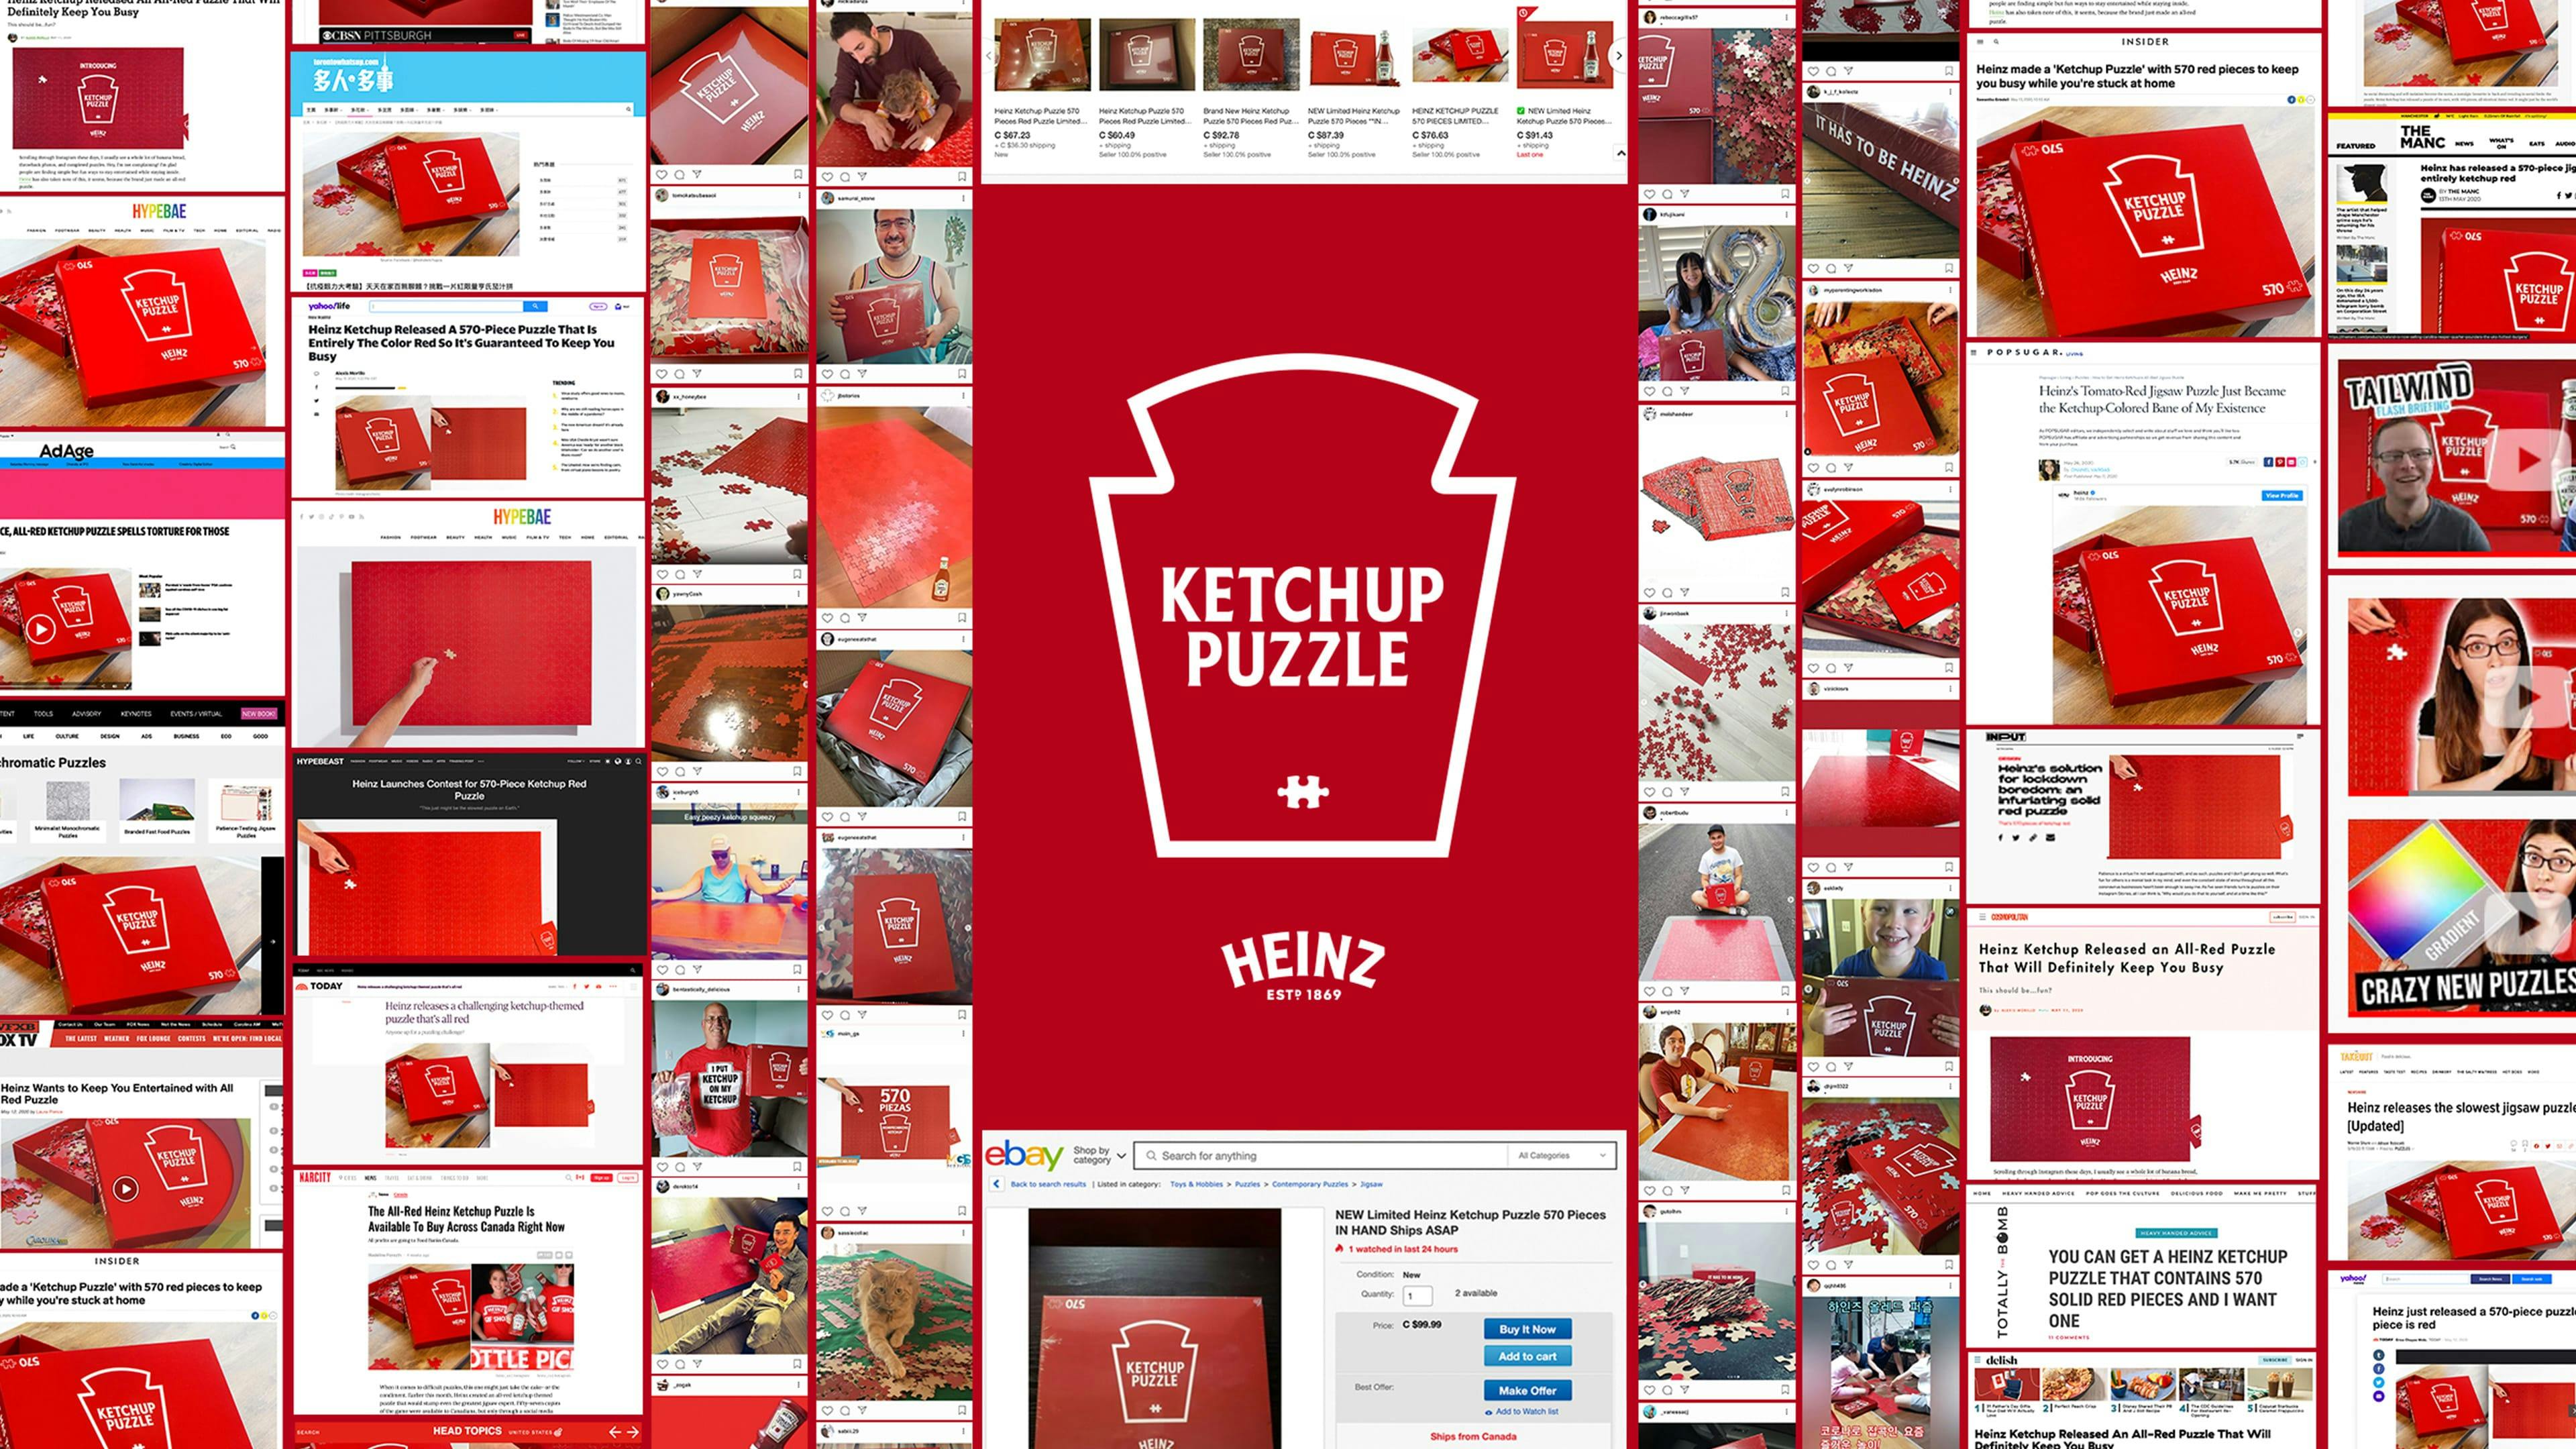 Heinz puzzle social media posts collage.